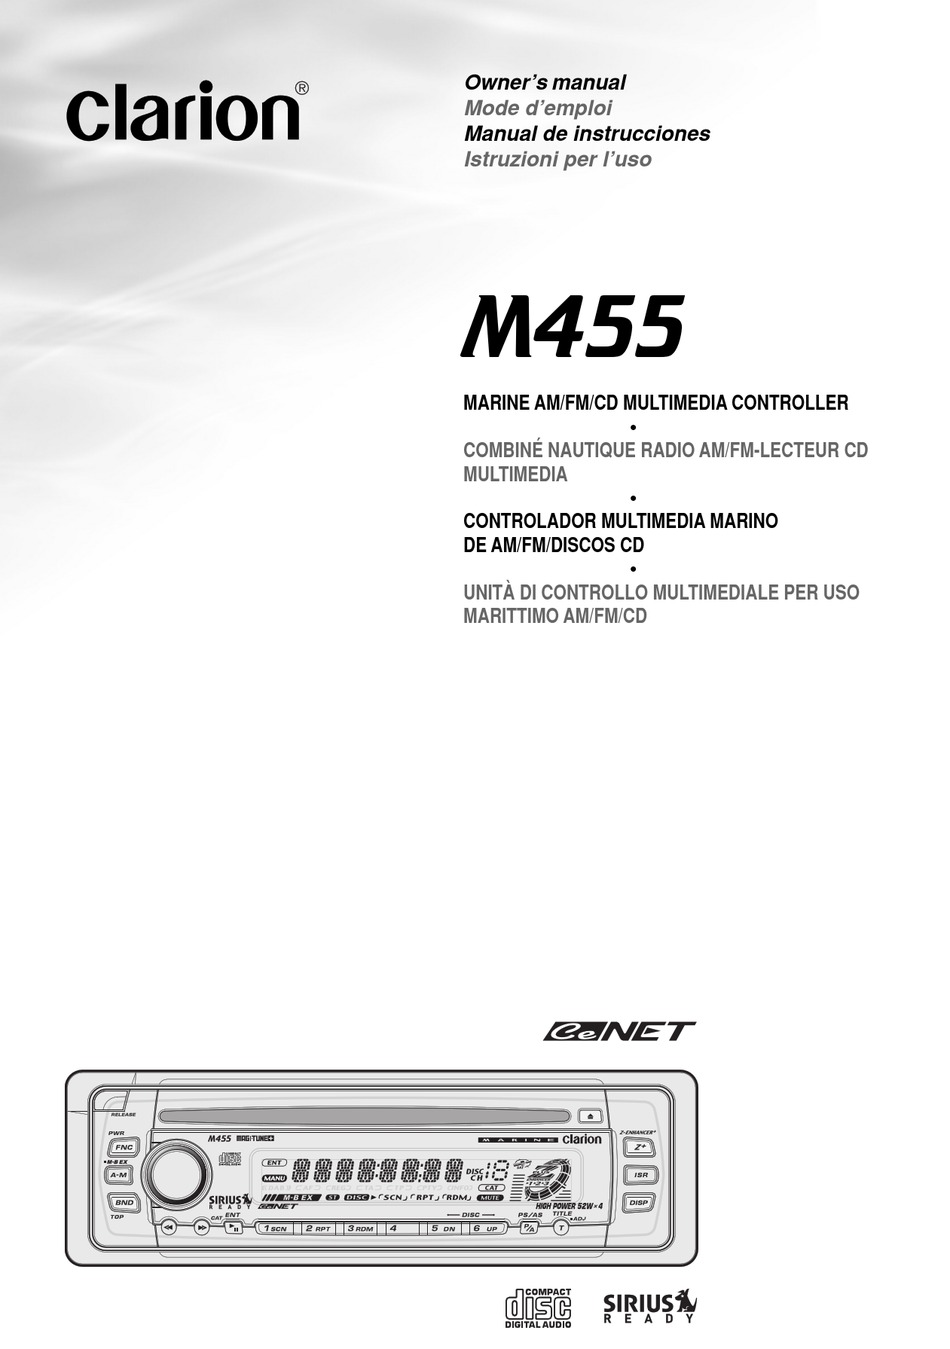 CLARION M455 OWNER'S MANUAL Pdf Download | ManualsLib  Clarion Marine Radio M455 Wiring Diagram    ManualsLib